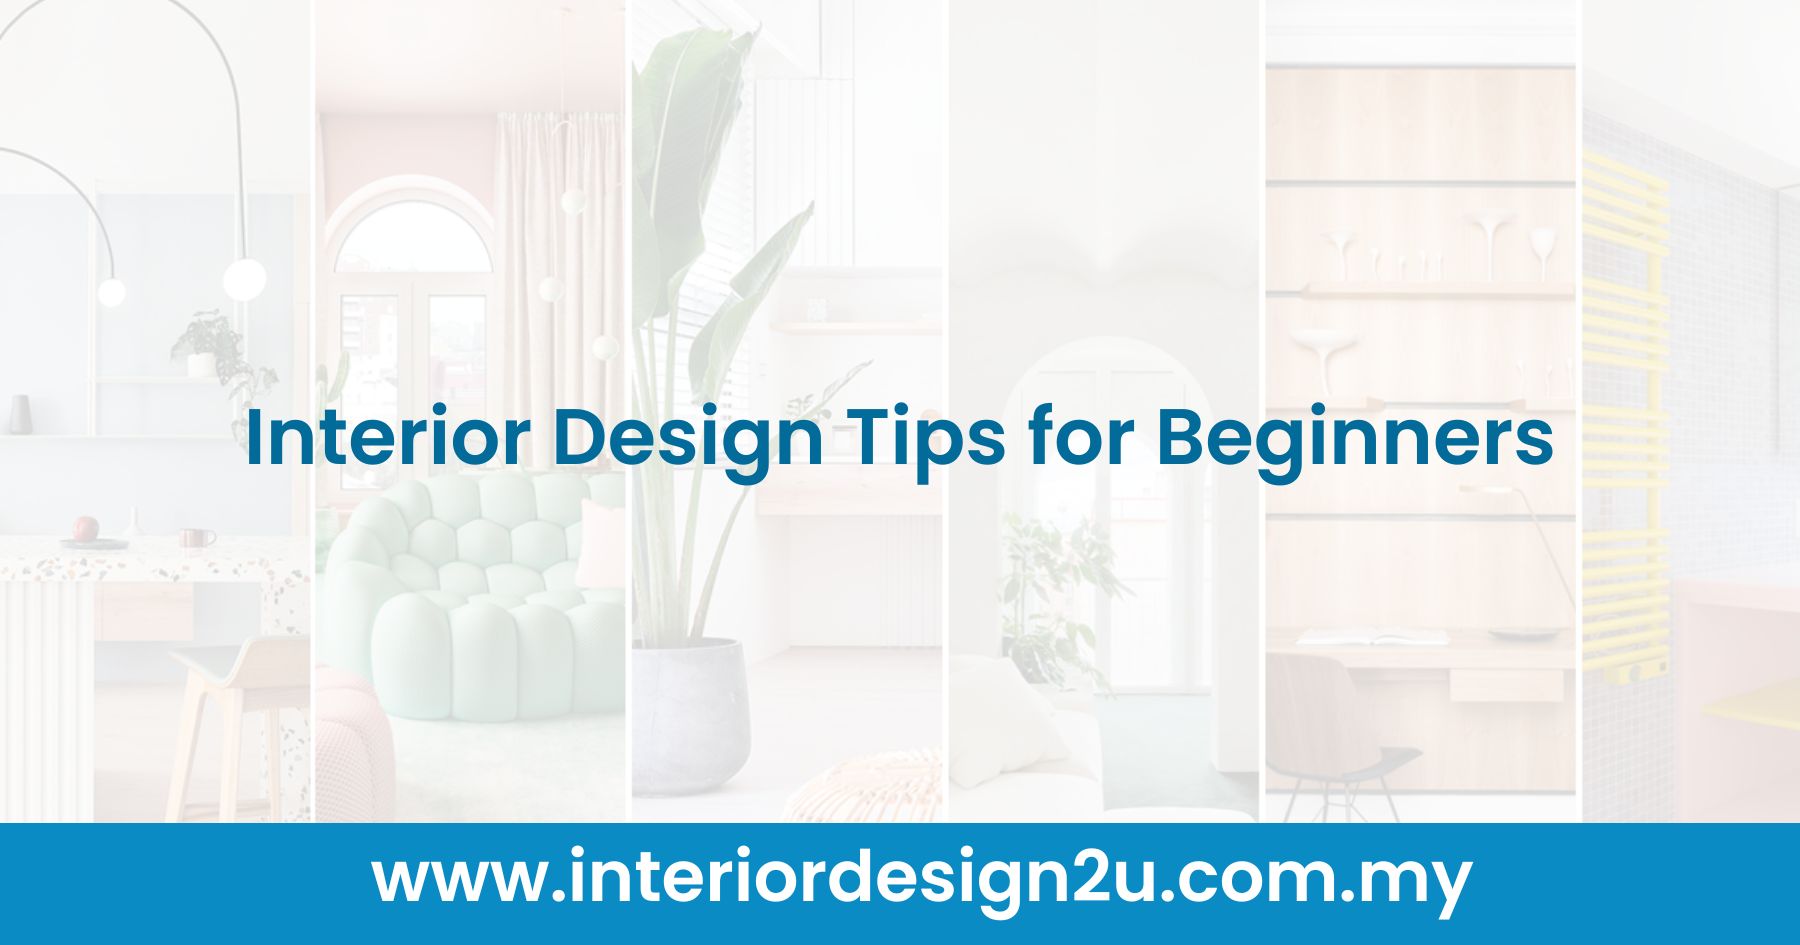 Interior Design Tips for Beginners